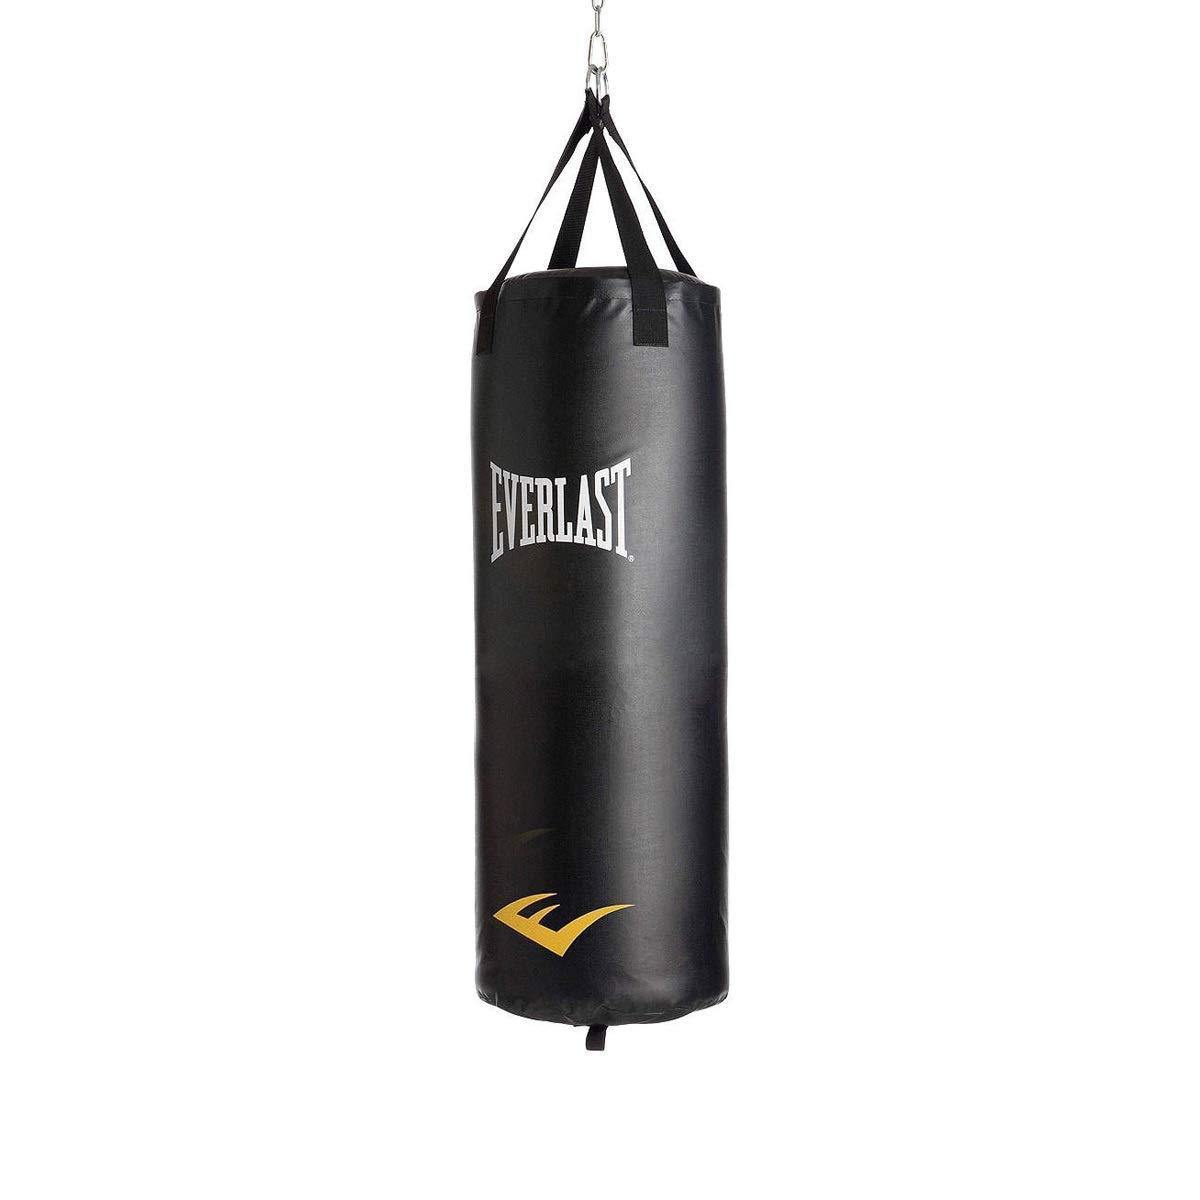 Everlast Nevatear Filled Punching Bag, 40 LBS (12" x 28") - Best Price online Prokicksports.com